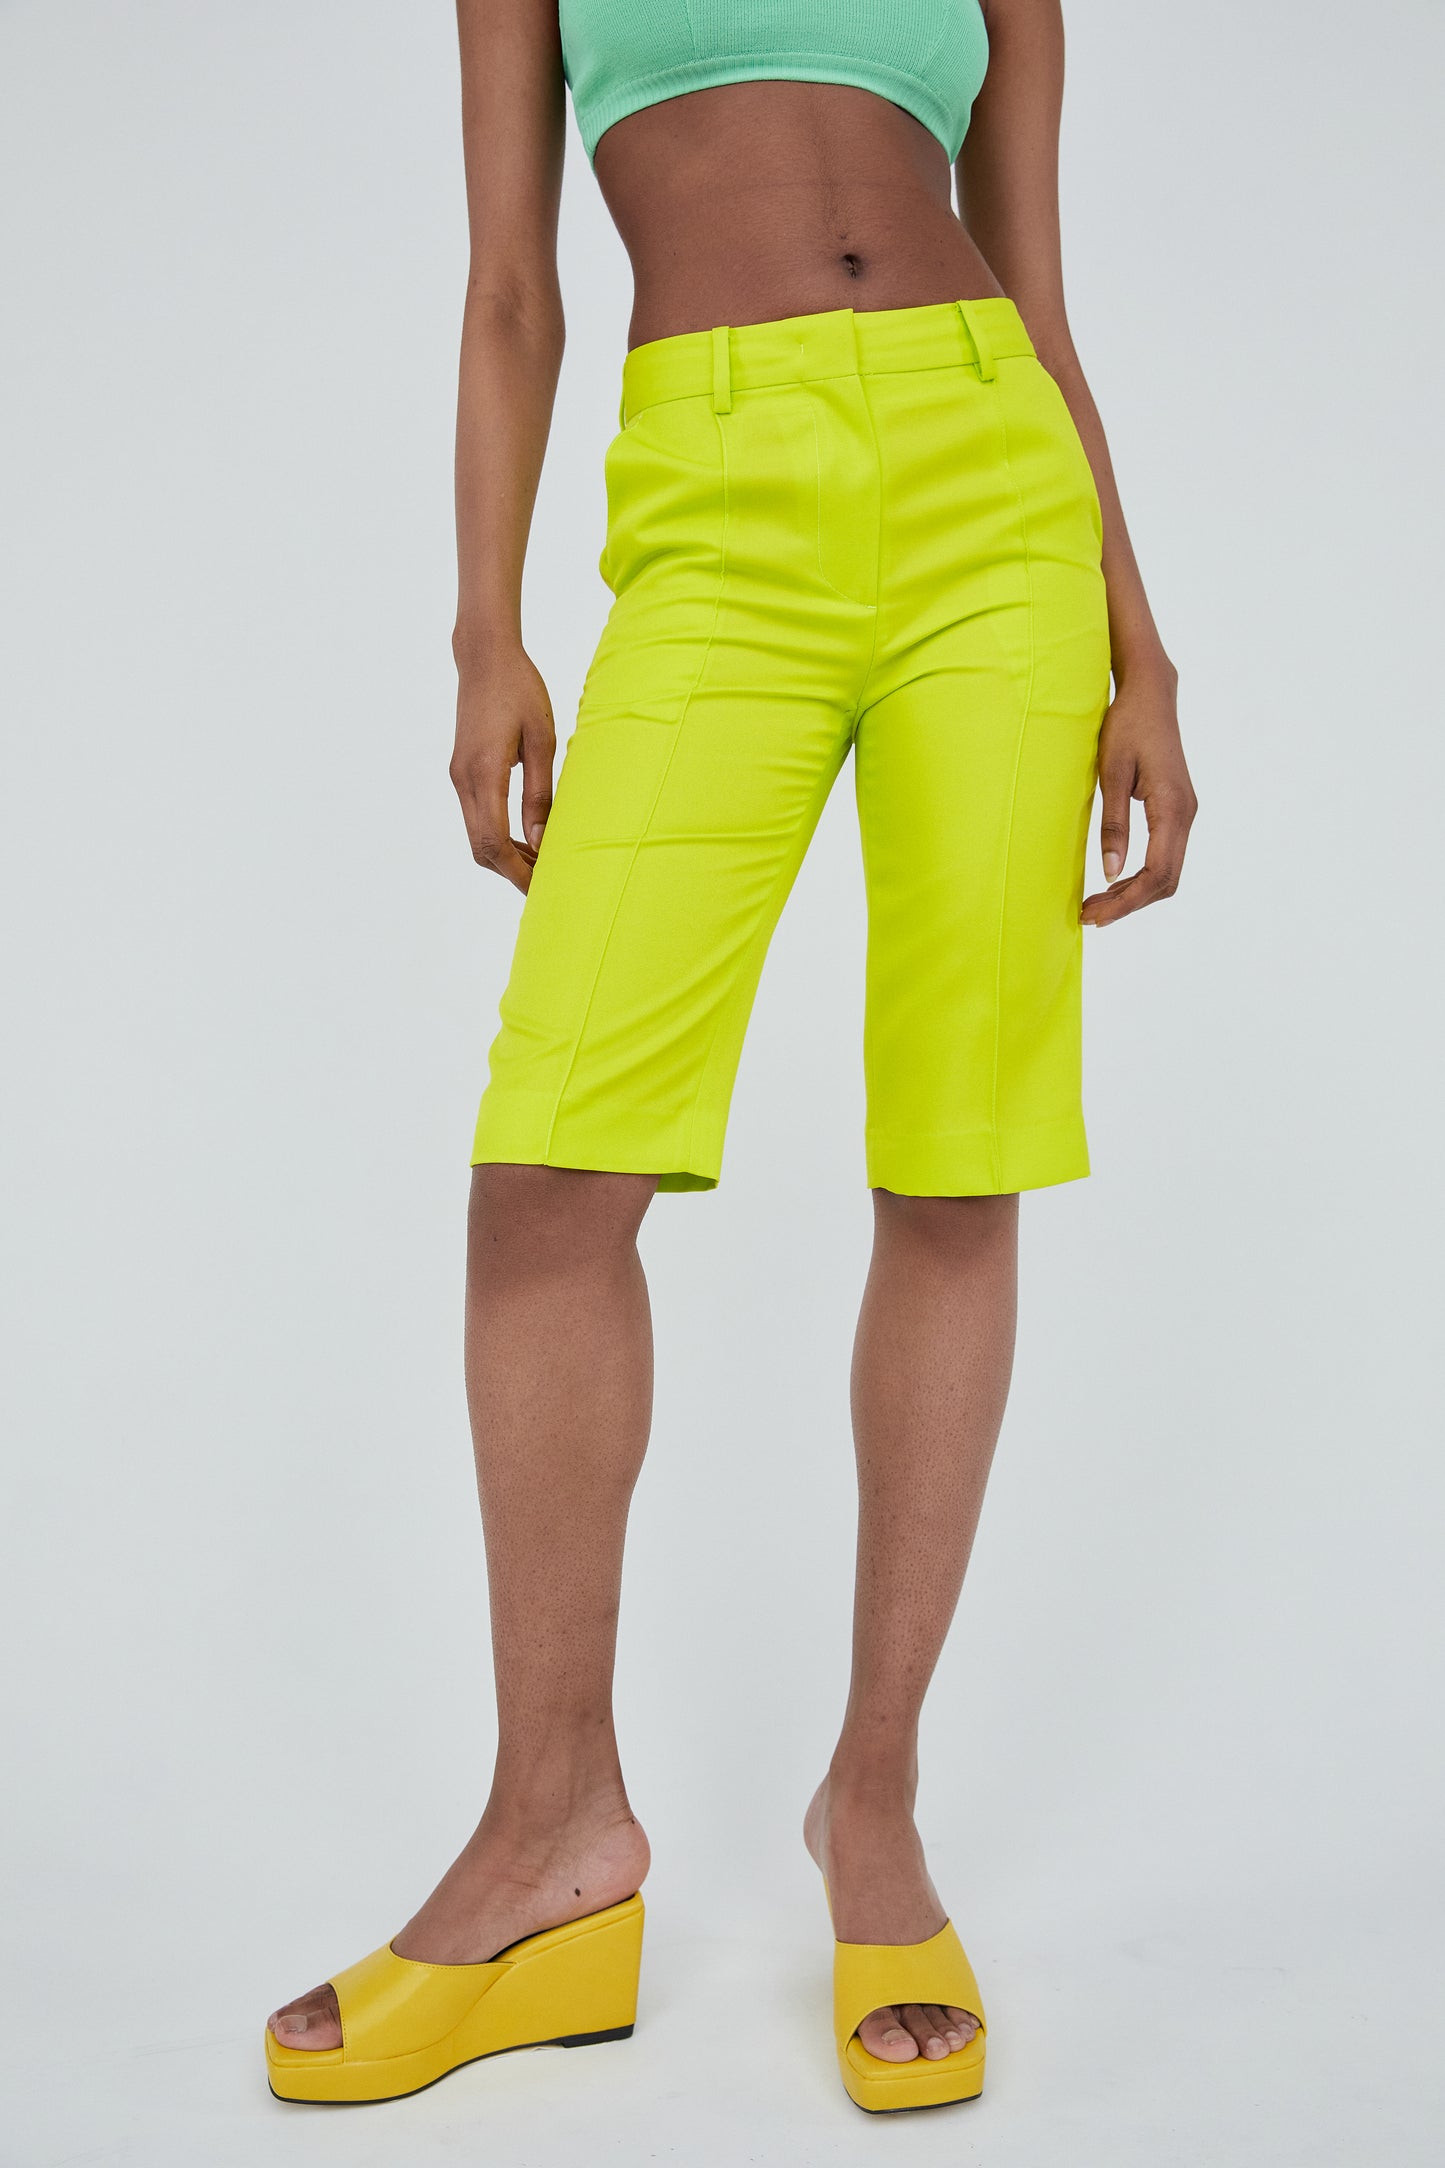 Bermuda Suit Shorts, Electric Lime